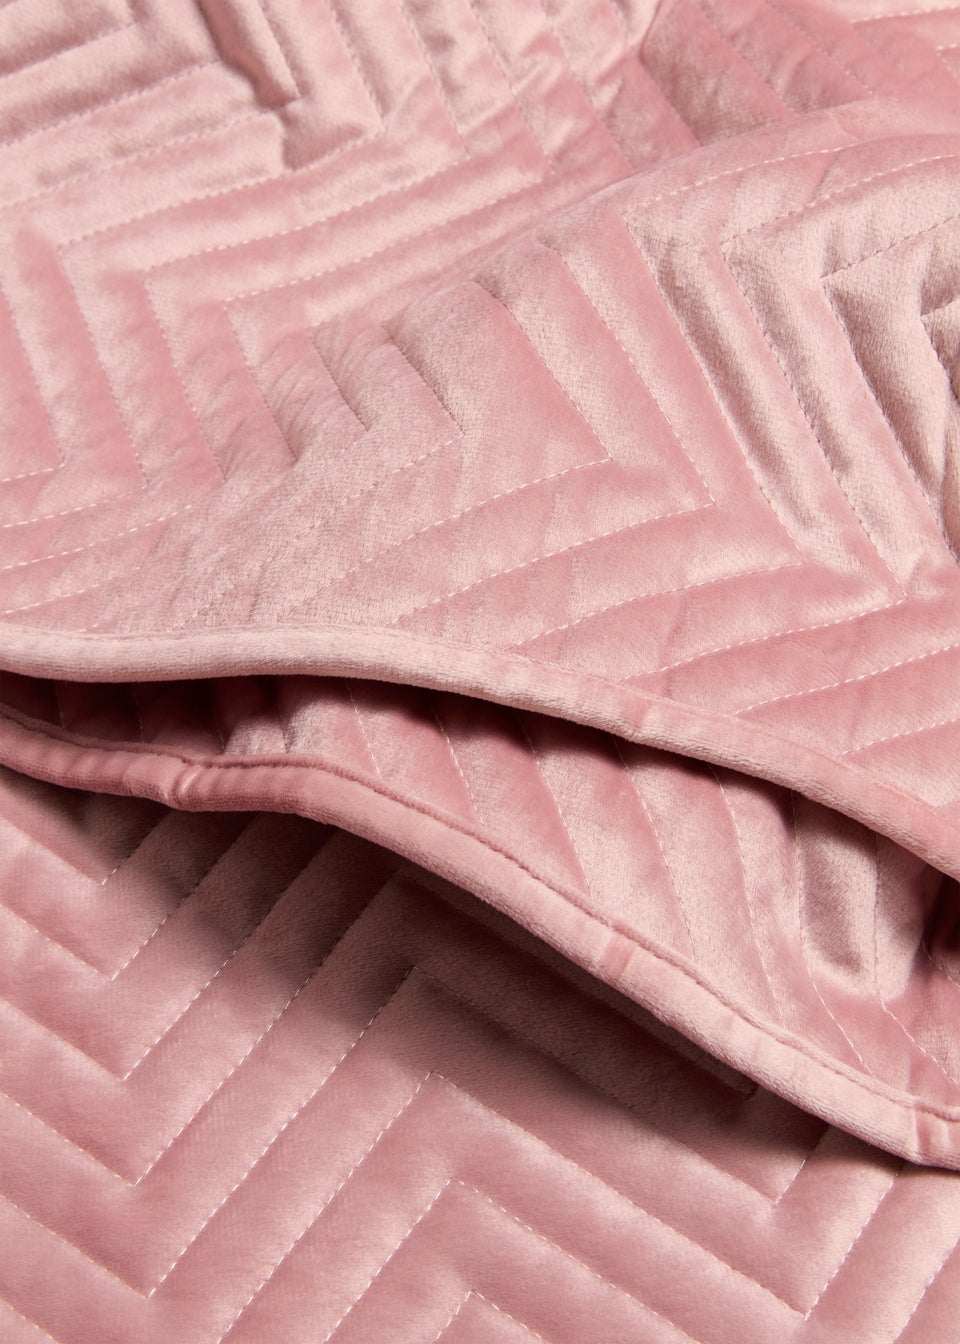 Pink Velvet Quilted Bedspread (235x235cm)